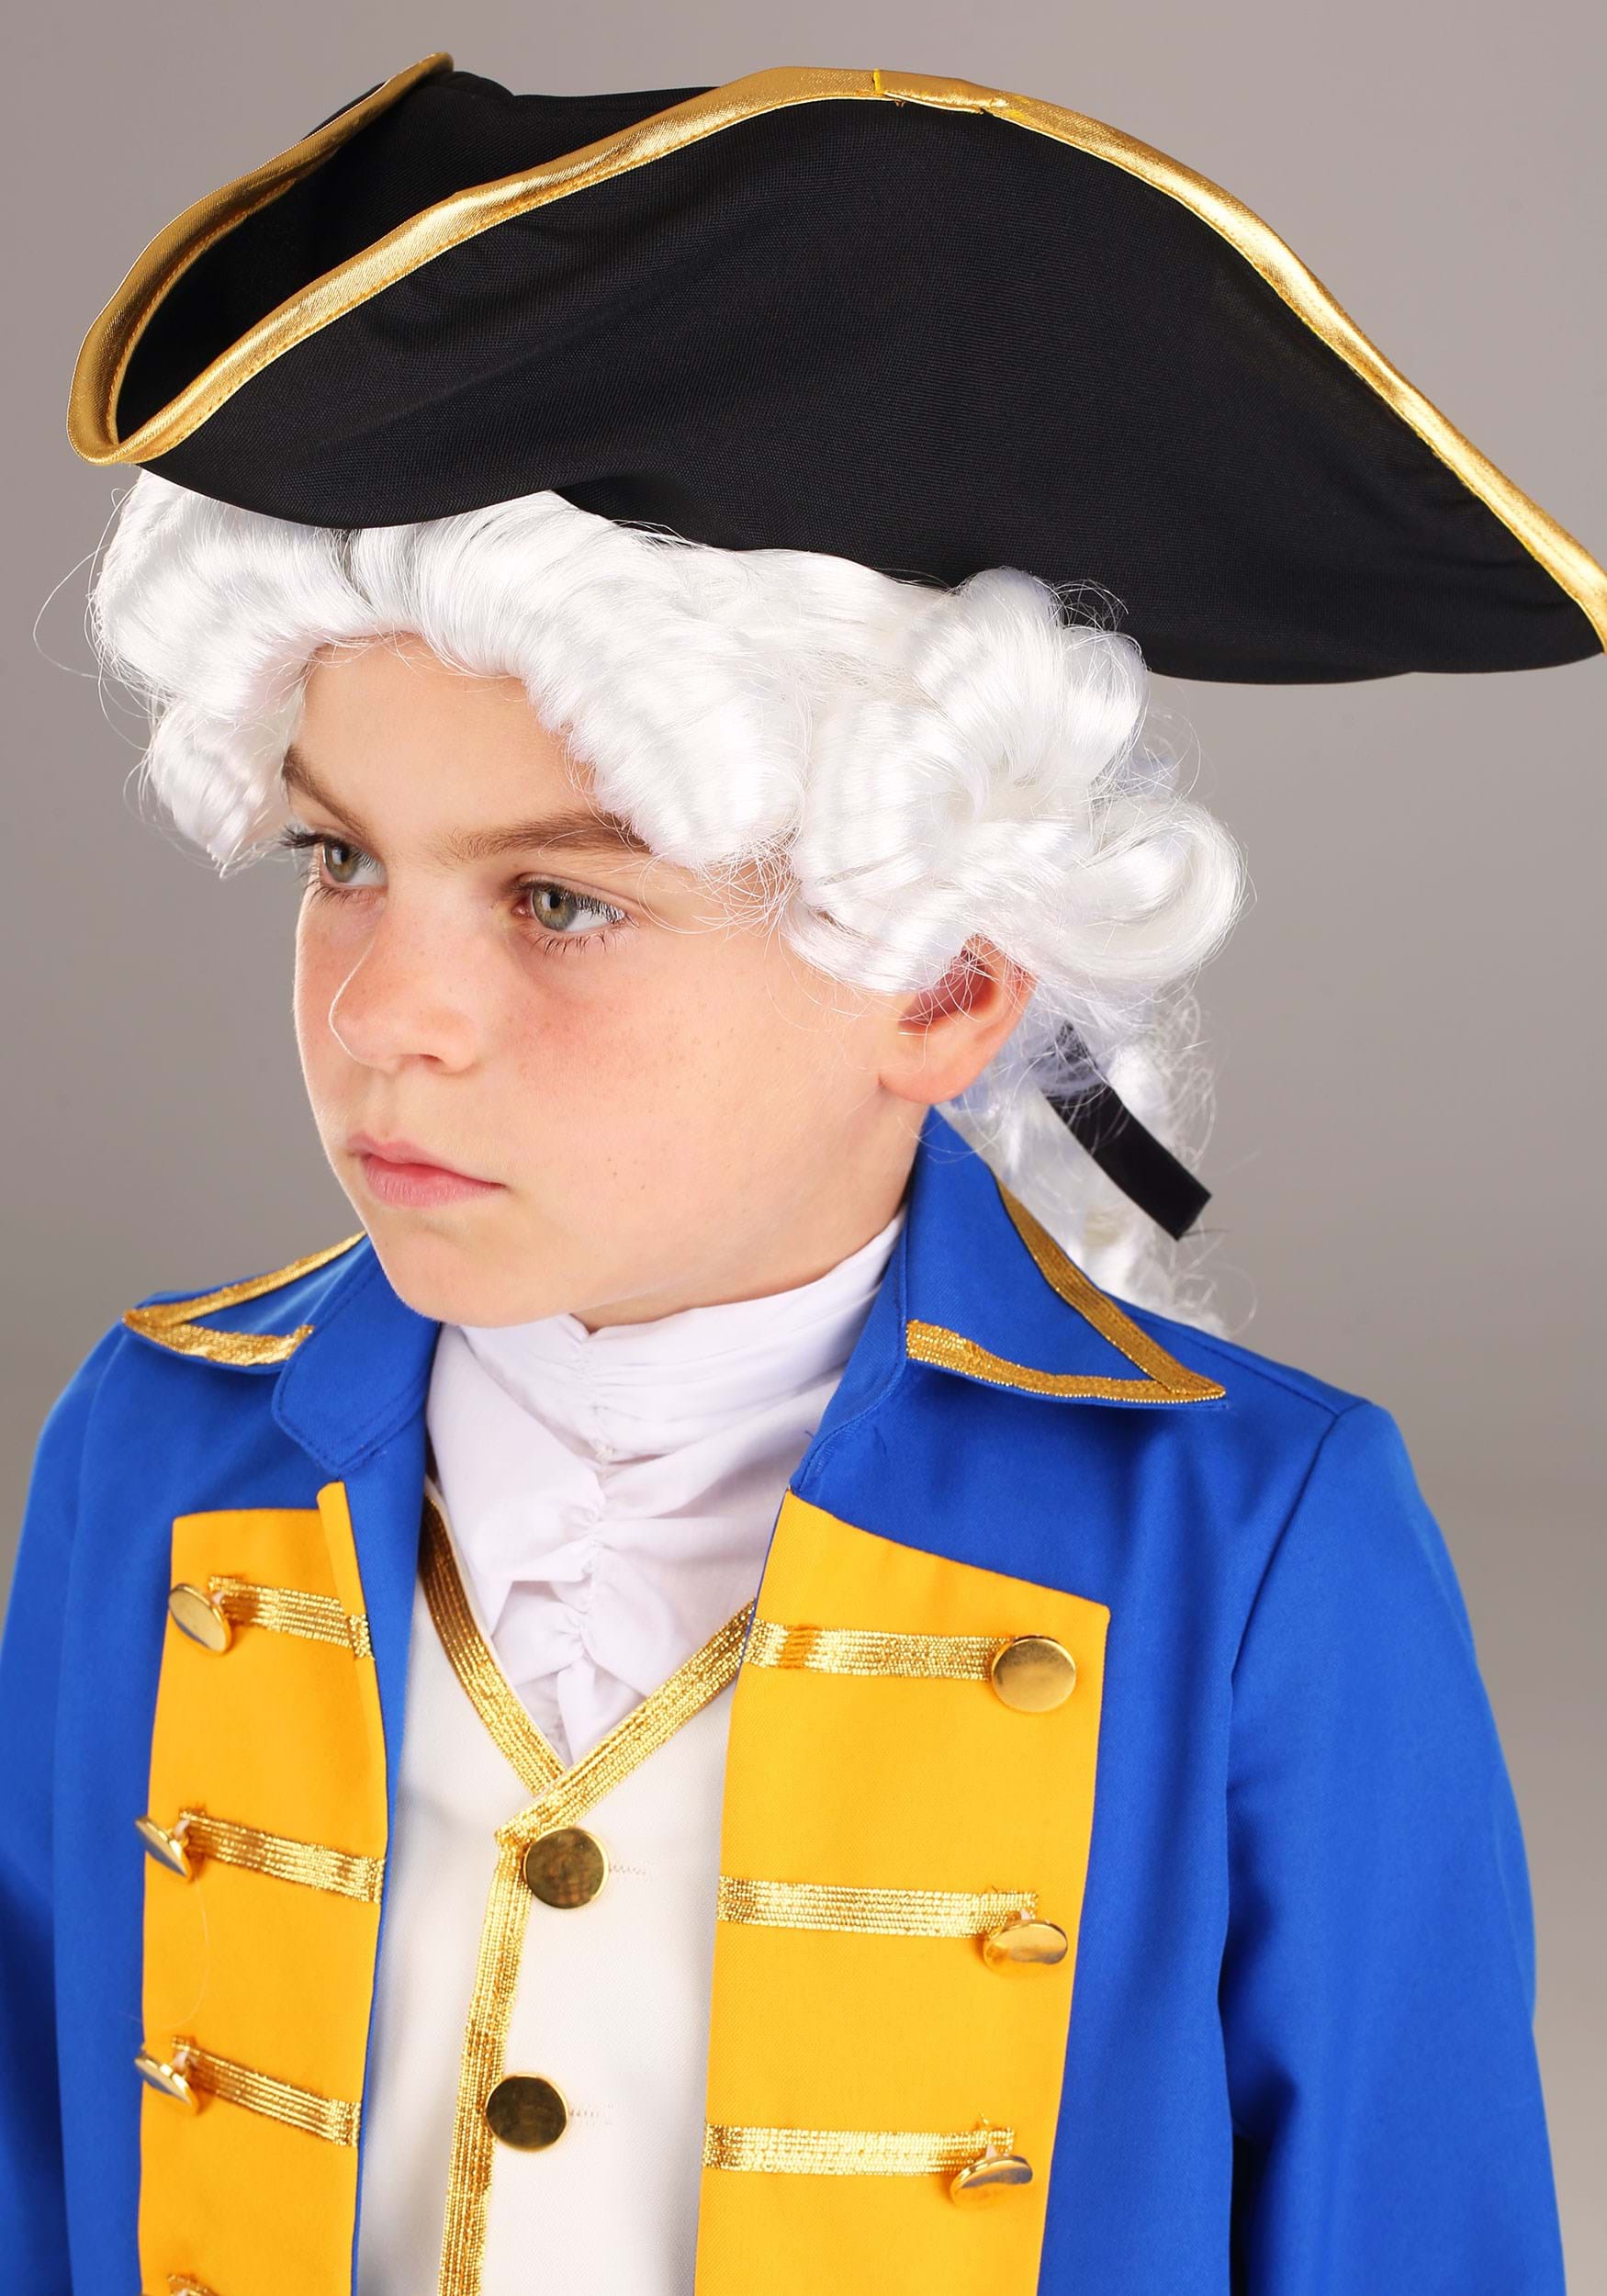 General Washington Costume For Kid's